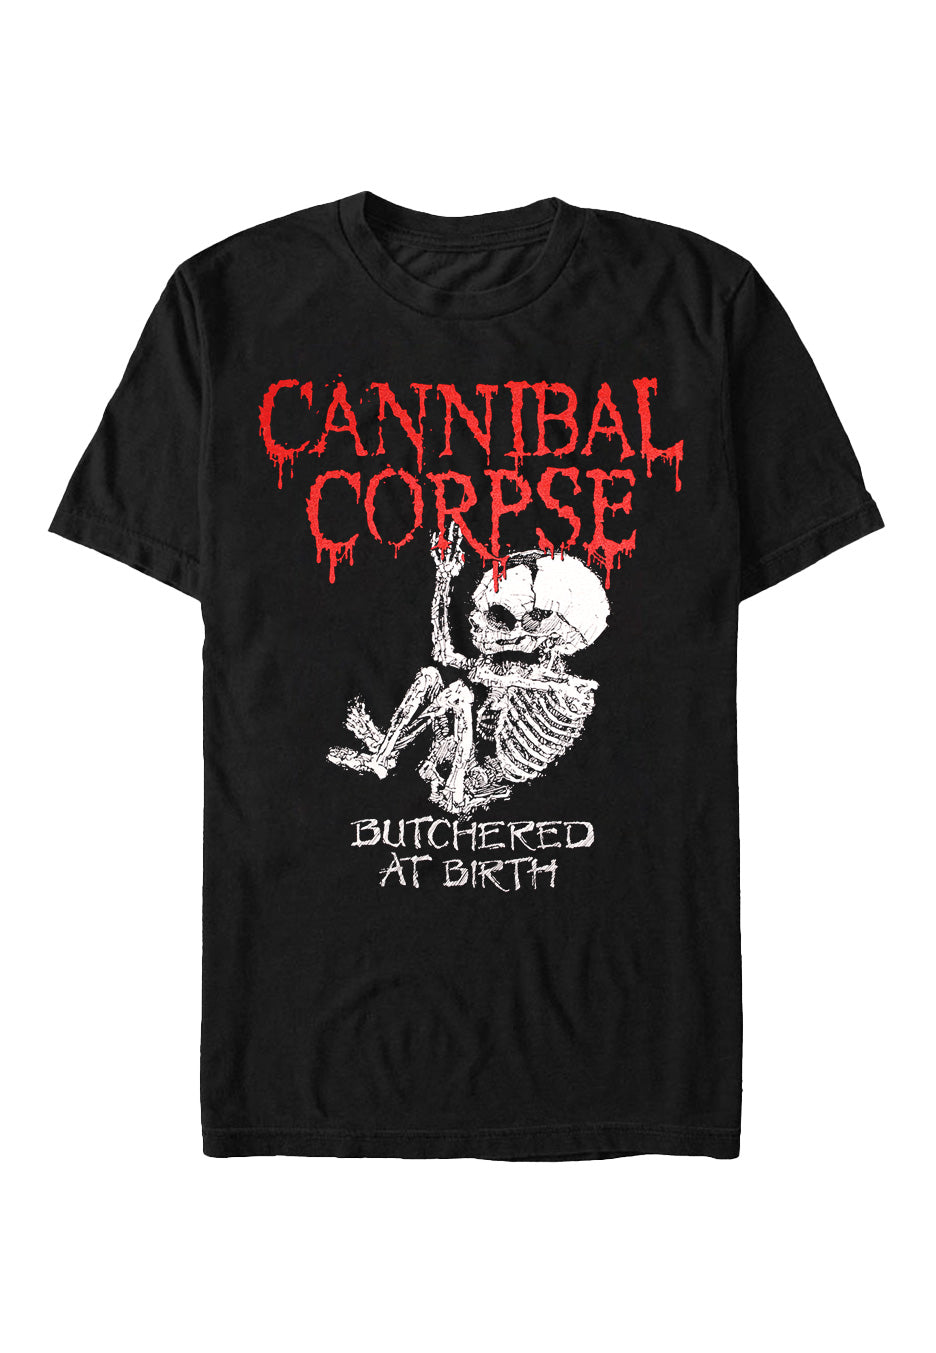 Cannibal Corpse - Butchered At Birth Baby - T-Shirt